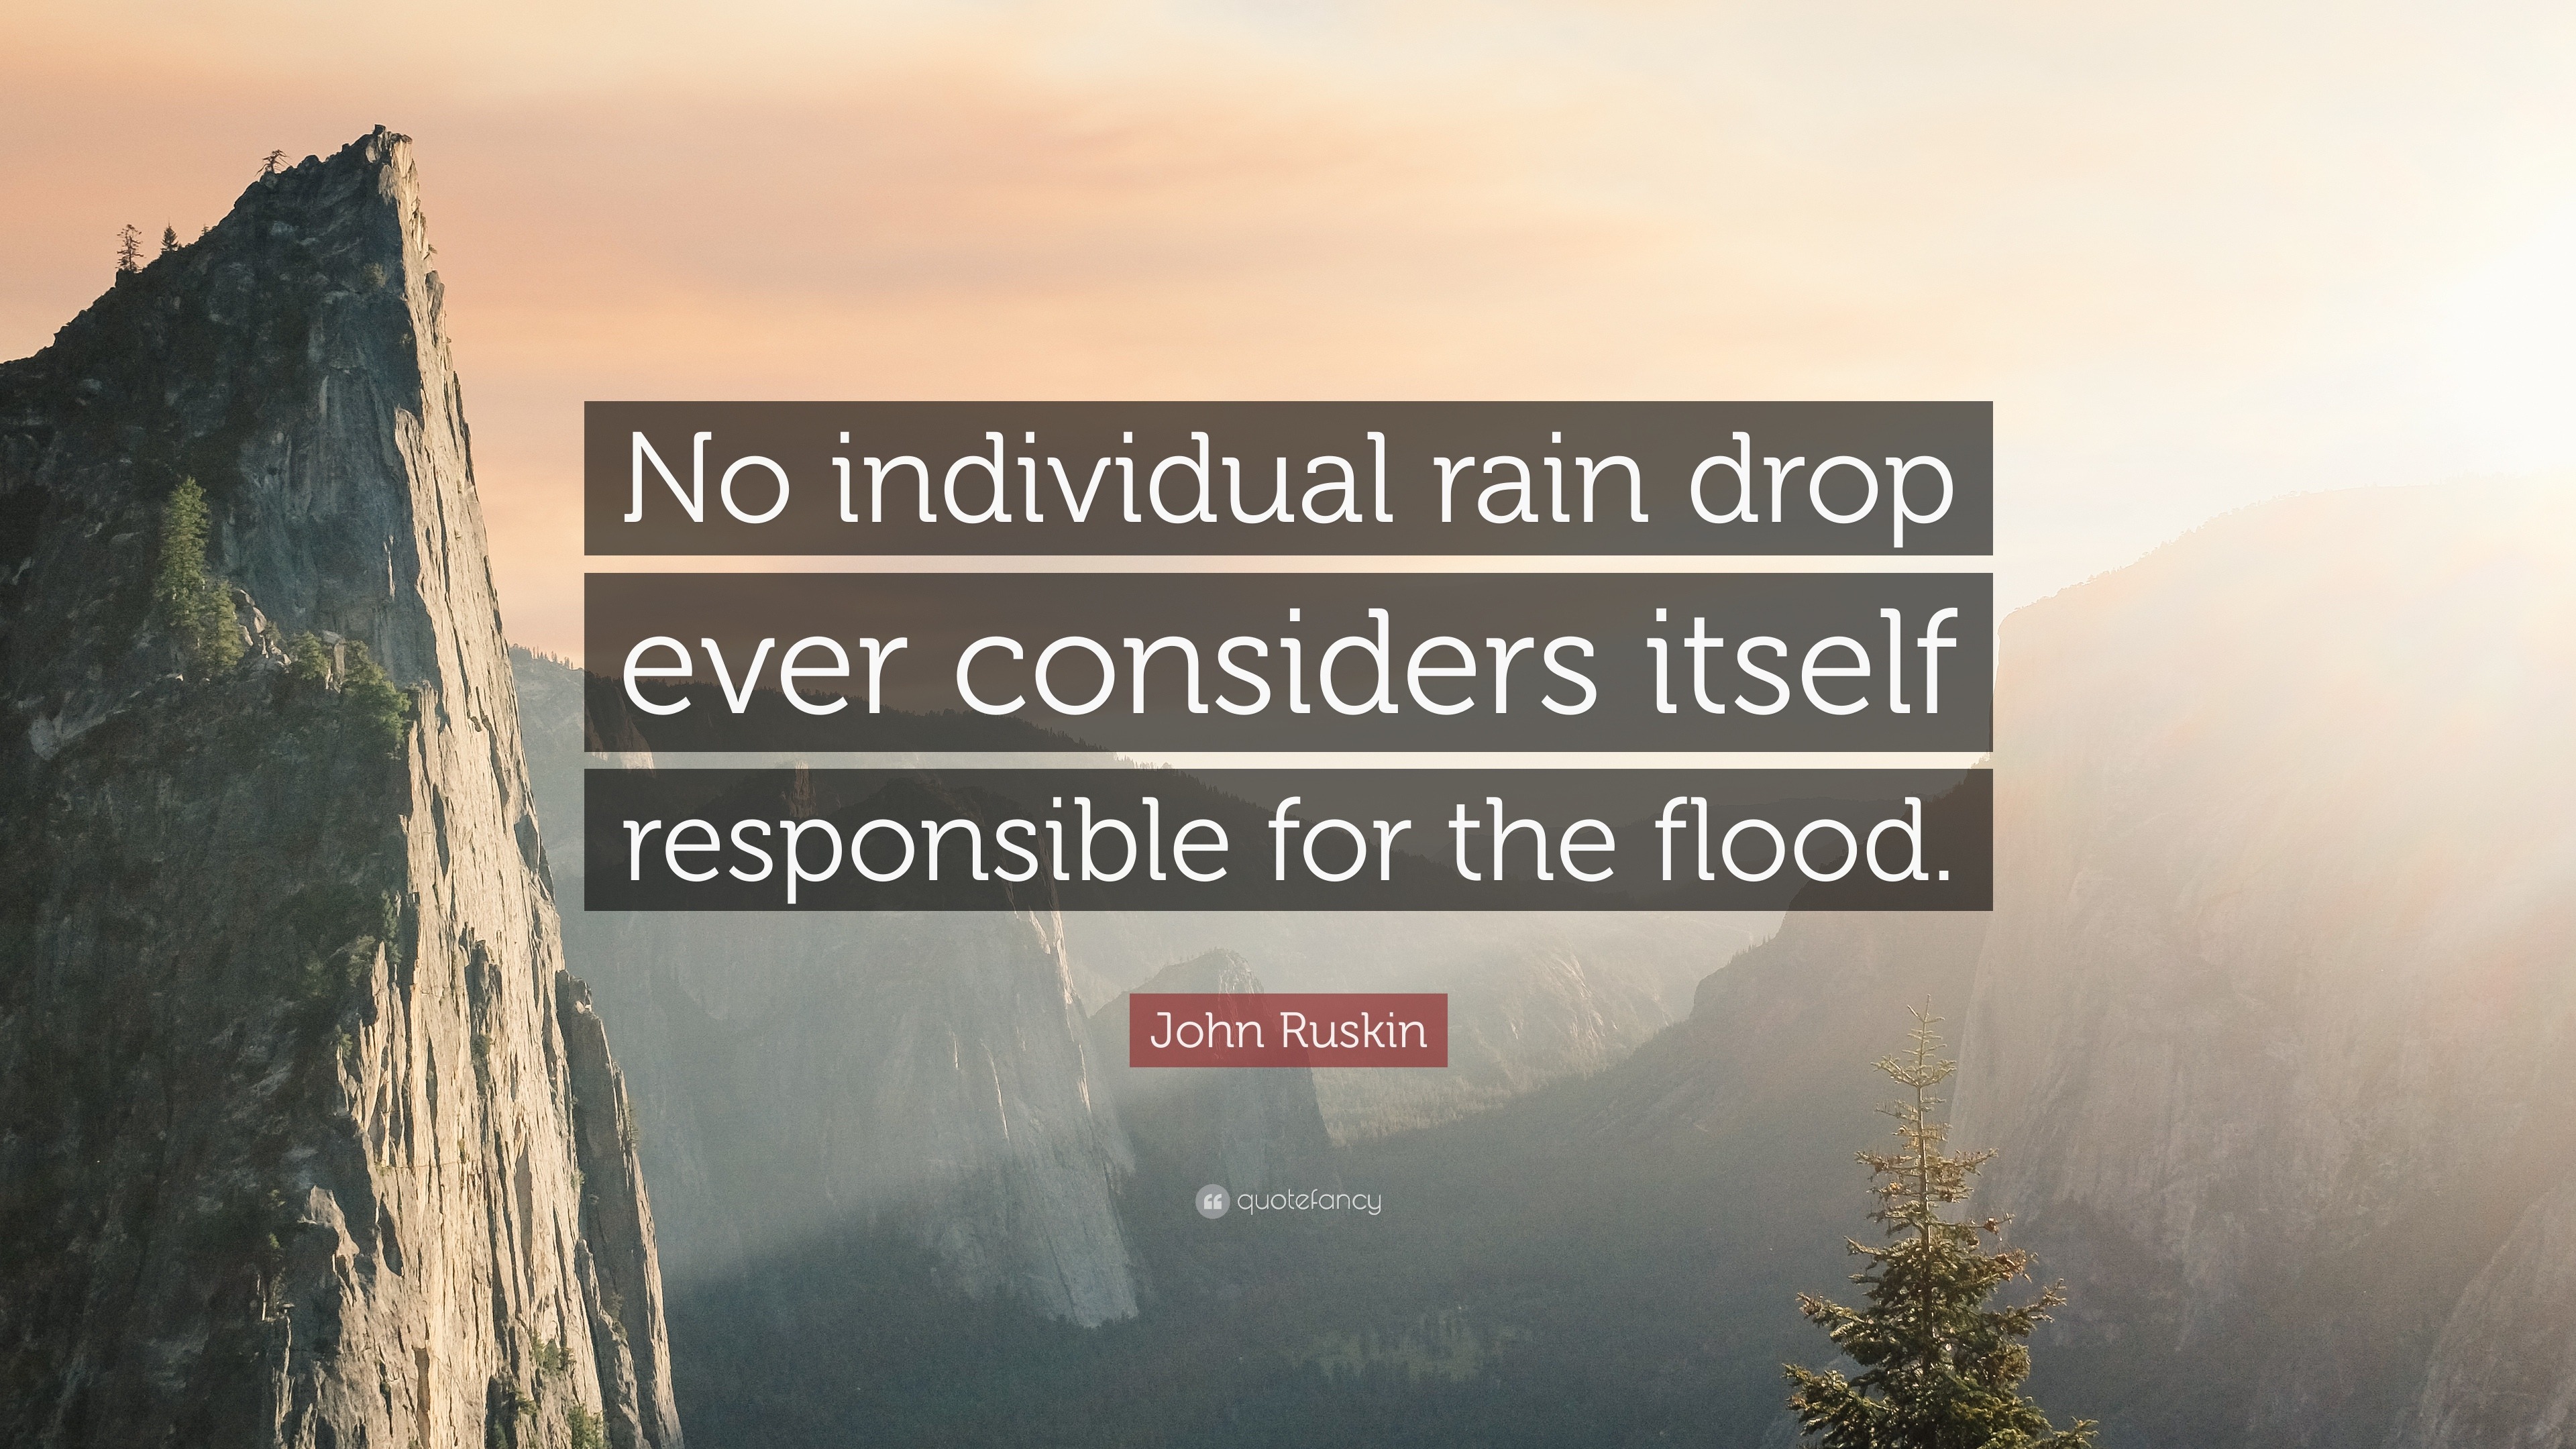 John Ruskin Quote: “No individual rain drop ever considers itself